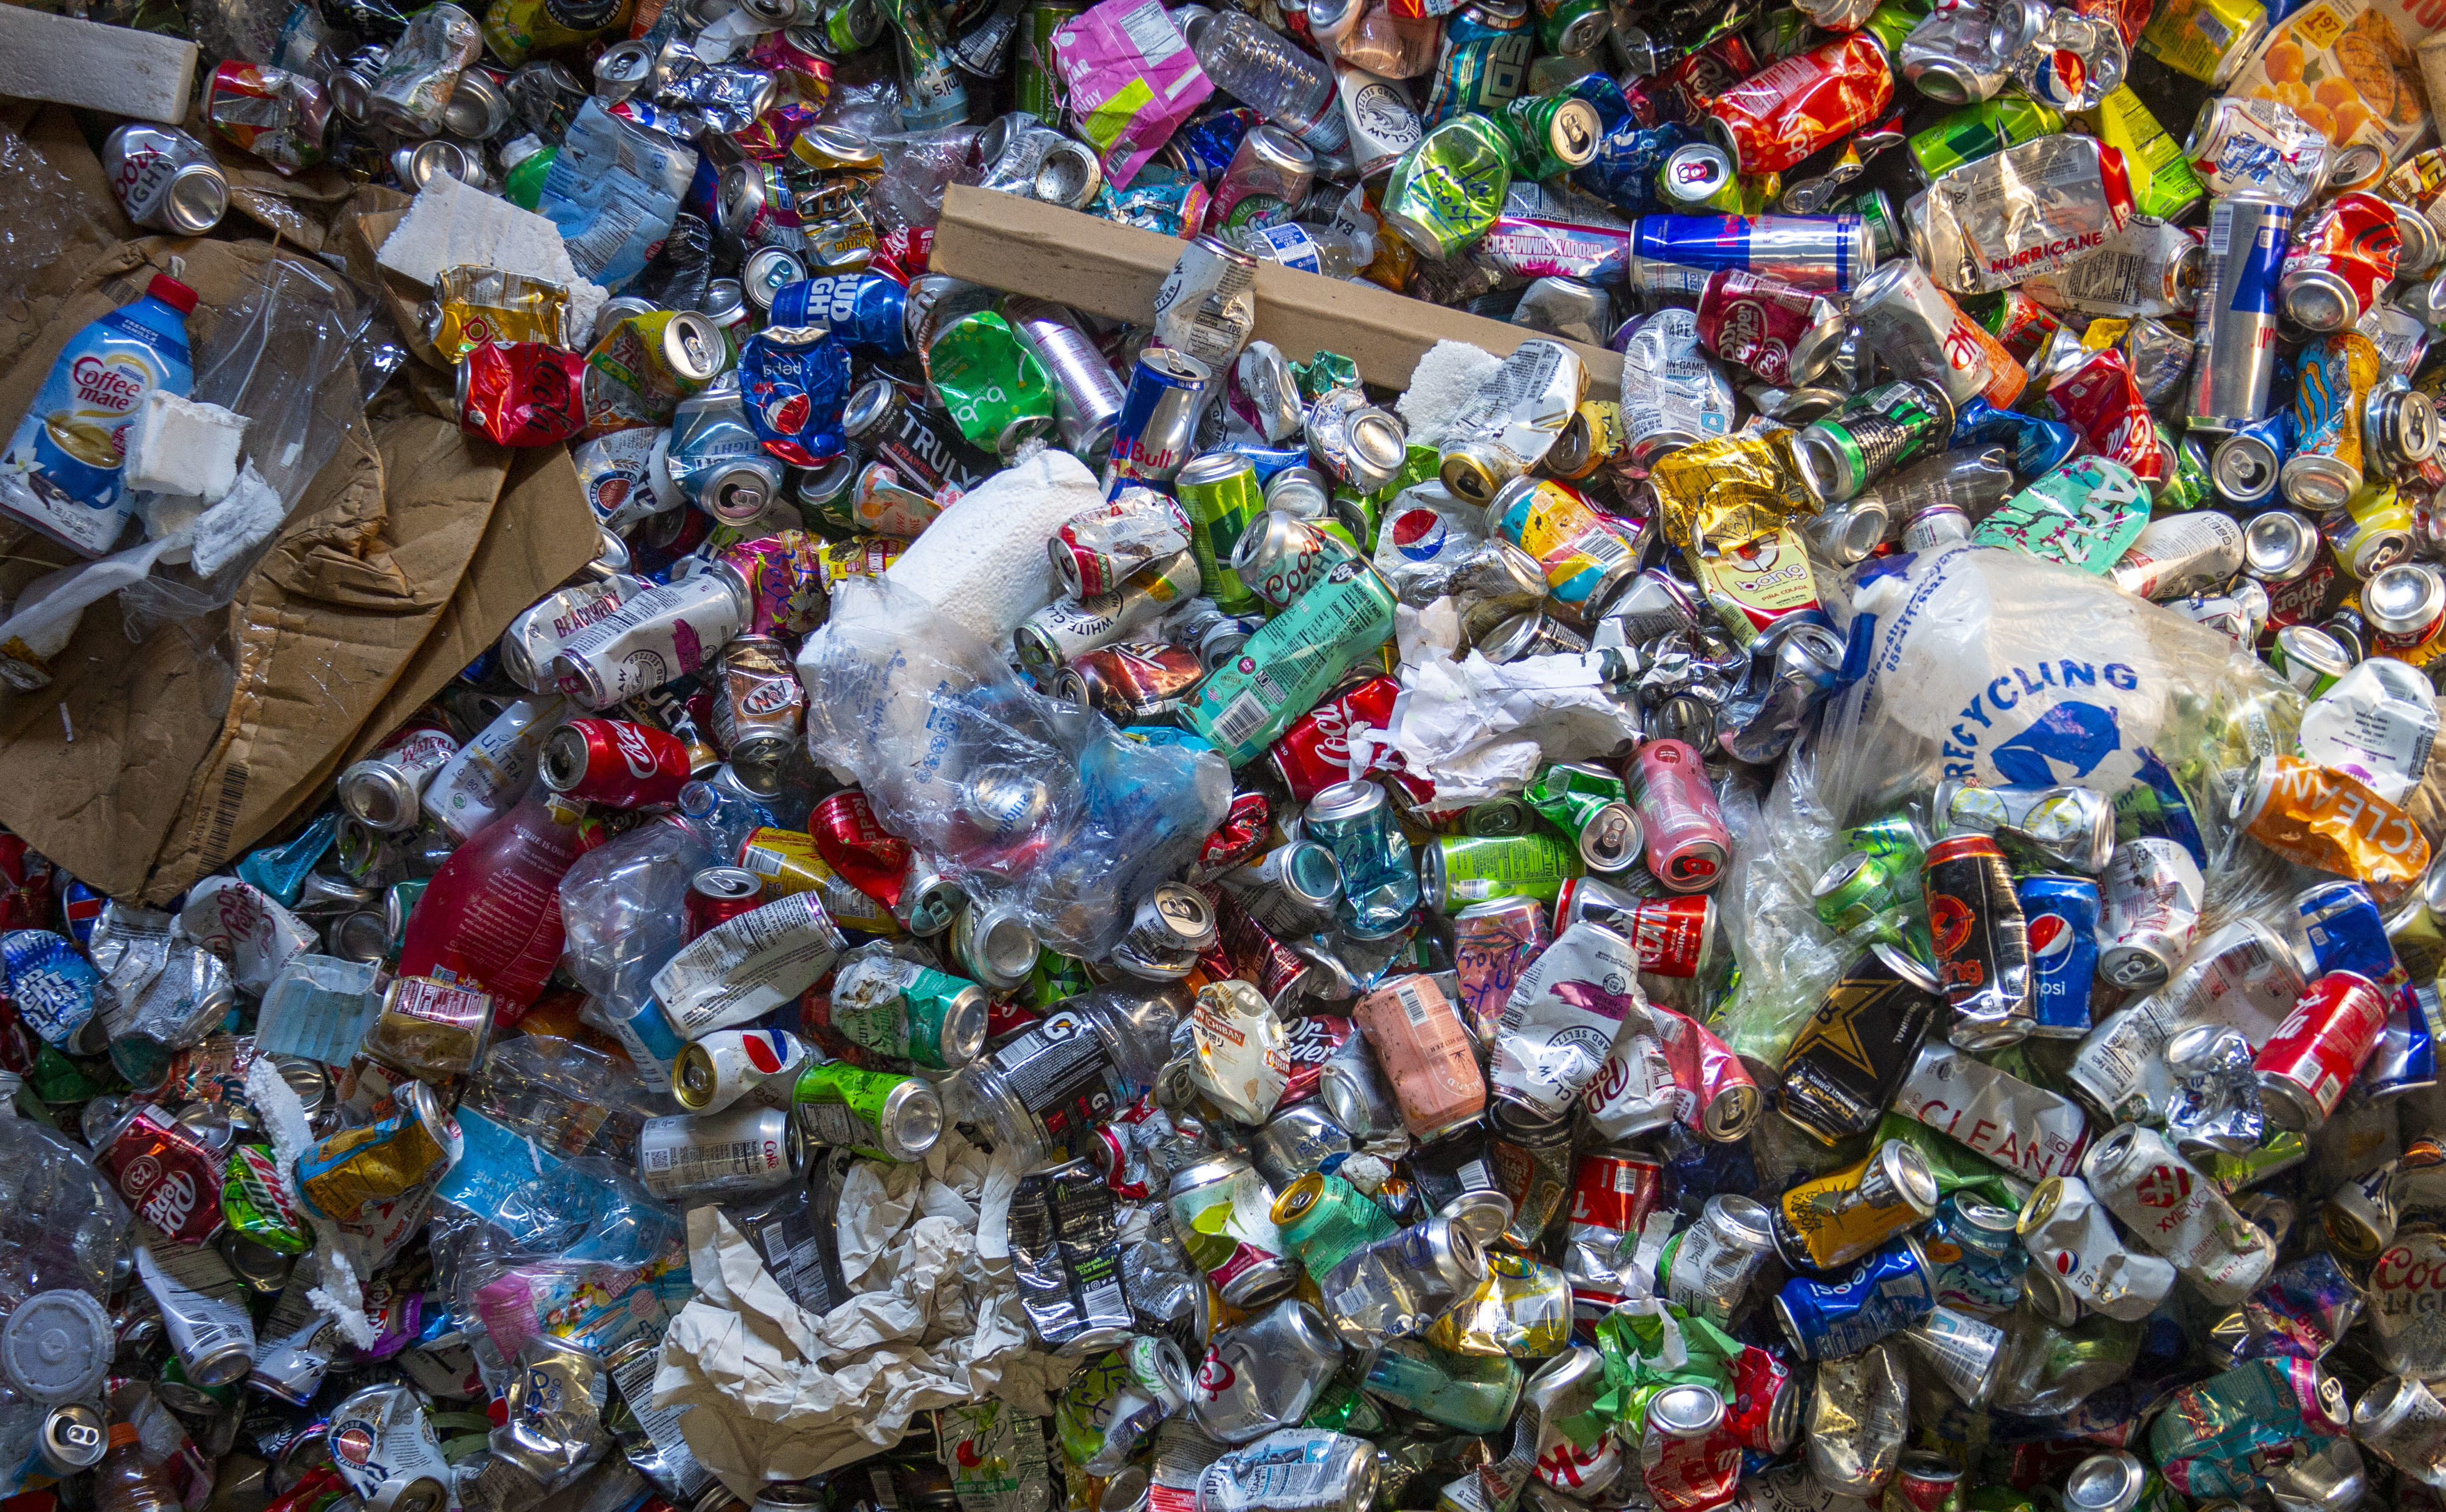 Stop the drop: Pendleton community addresses illegal dumping